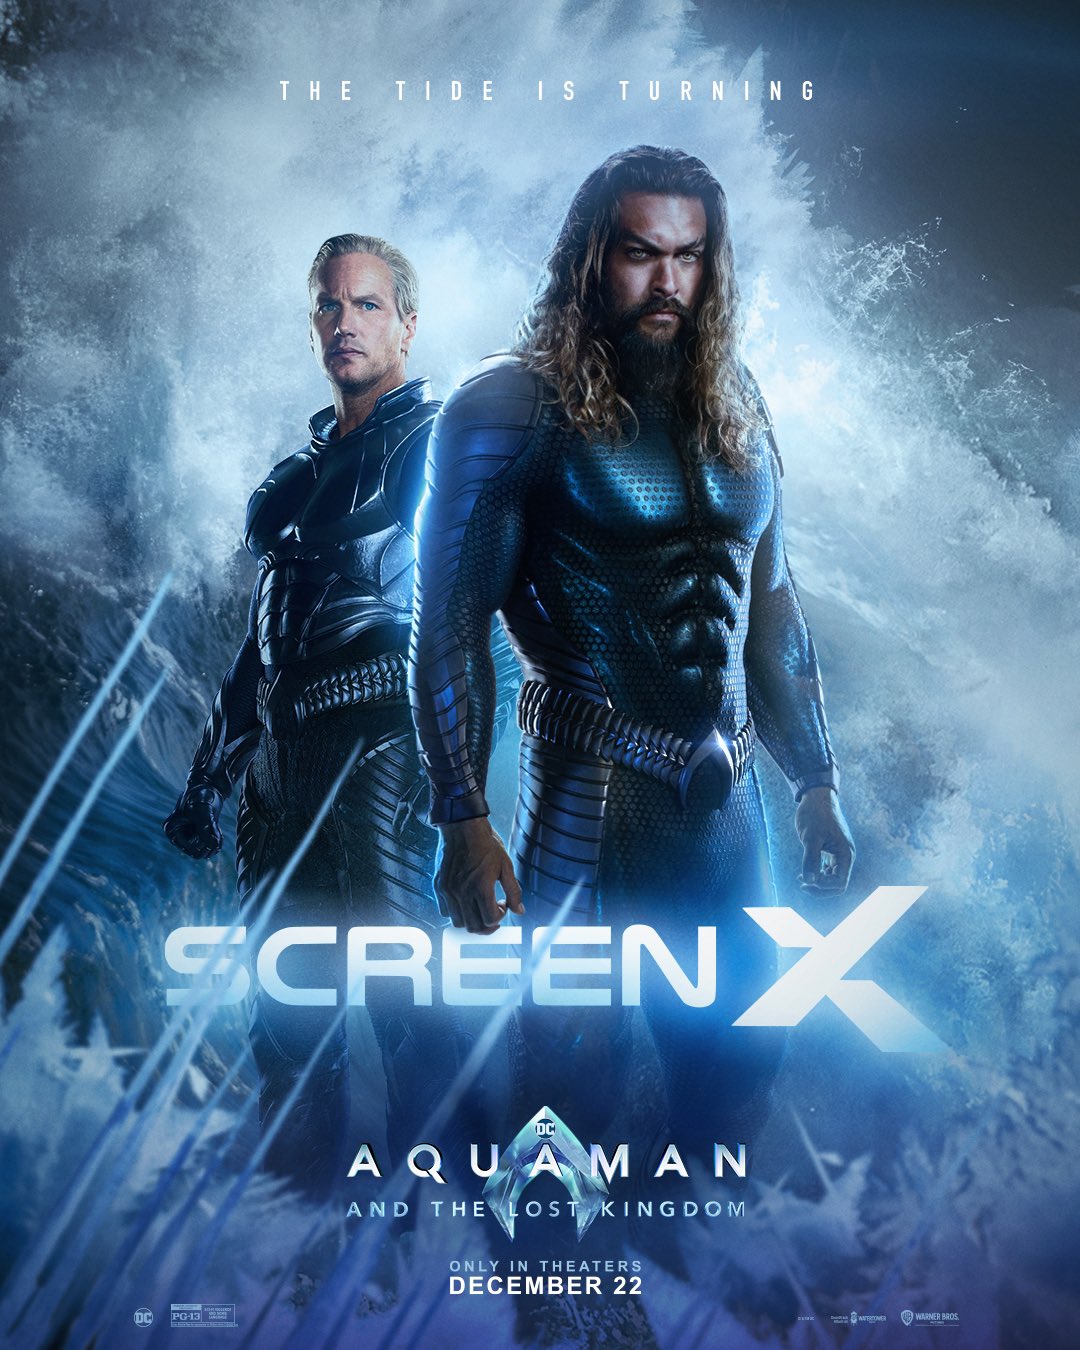 Aquaman 2 ScreenX poster